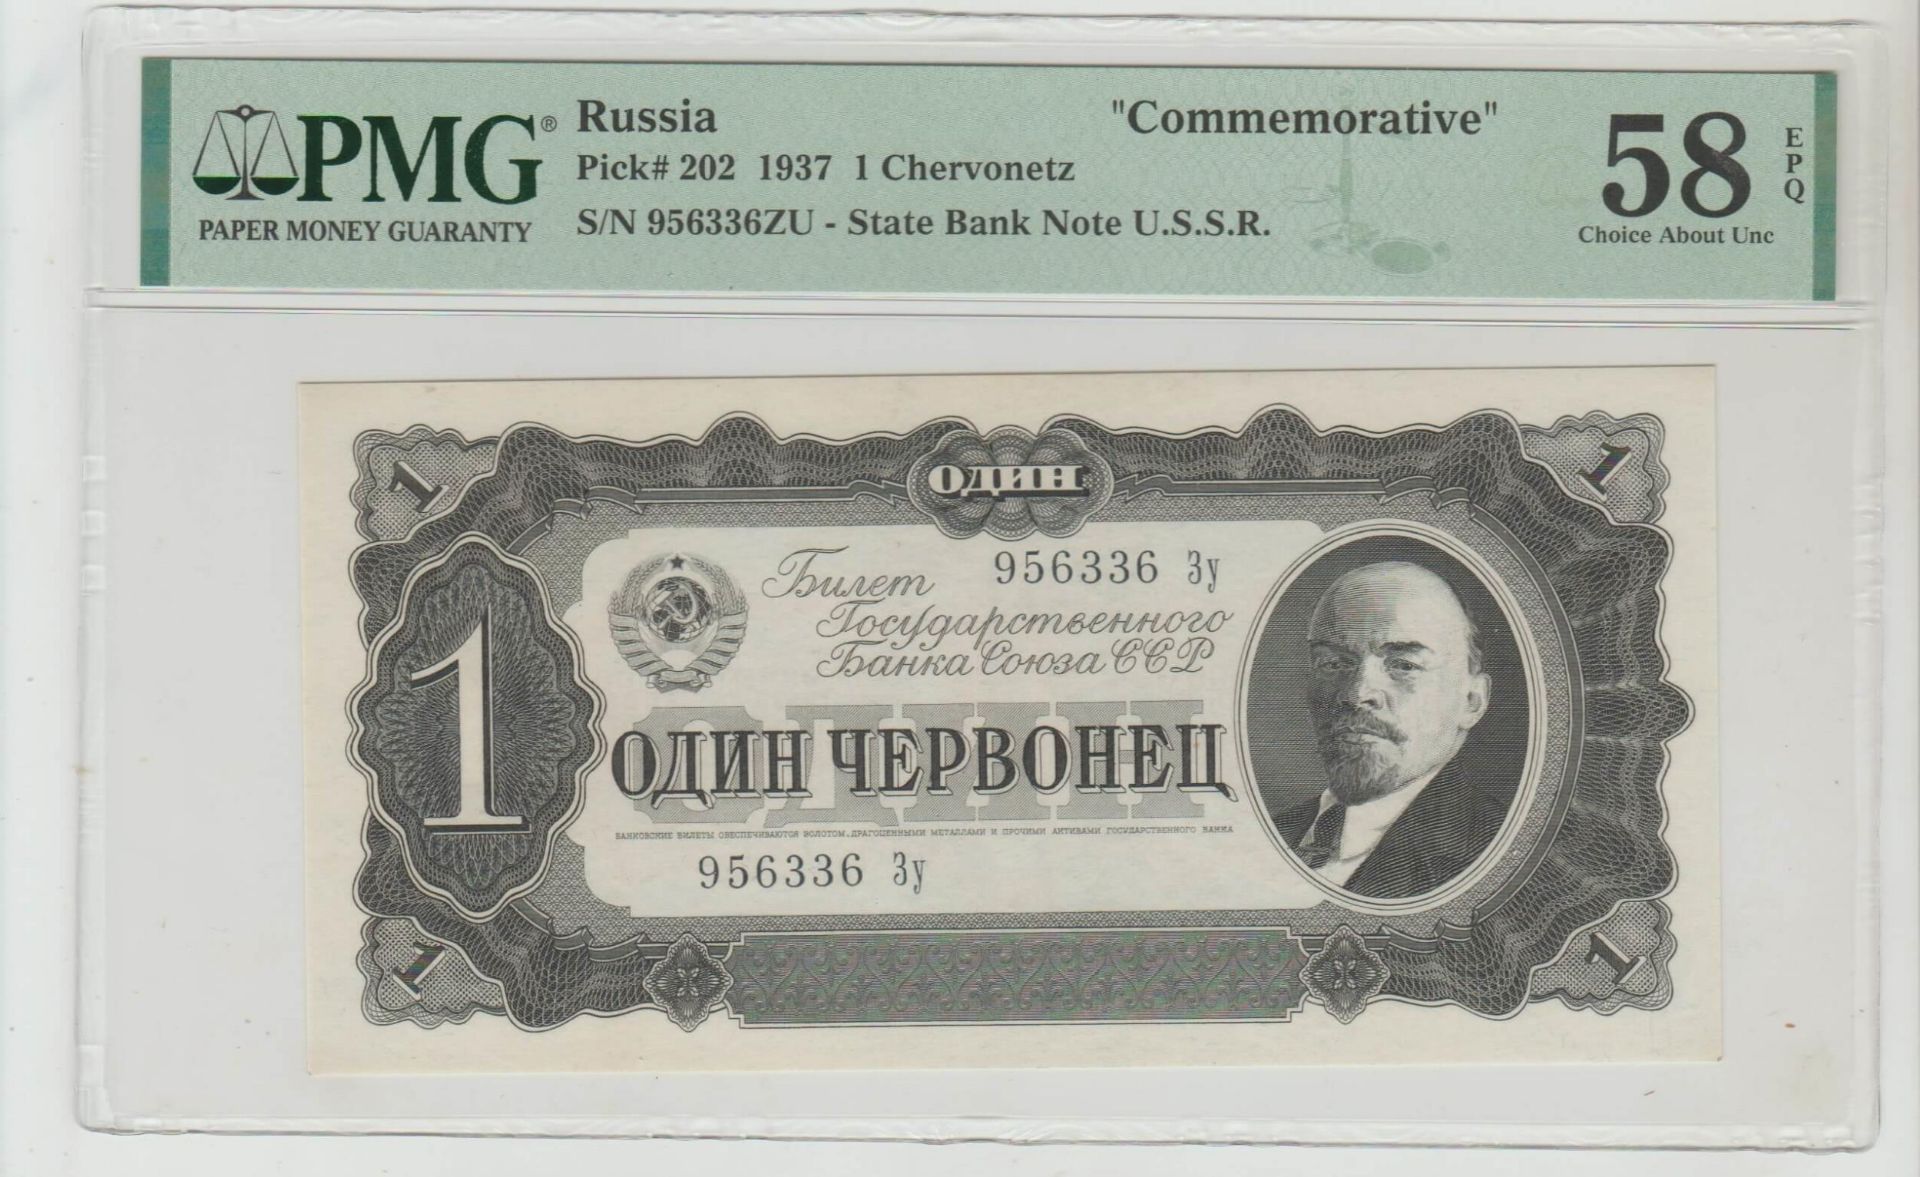 Russia, 1 Chervonetz, 1937 year